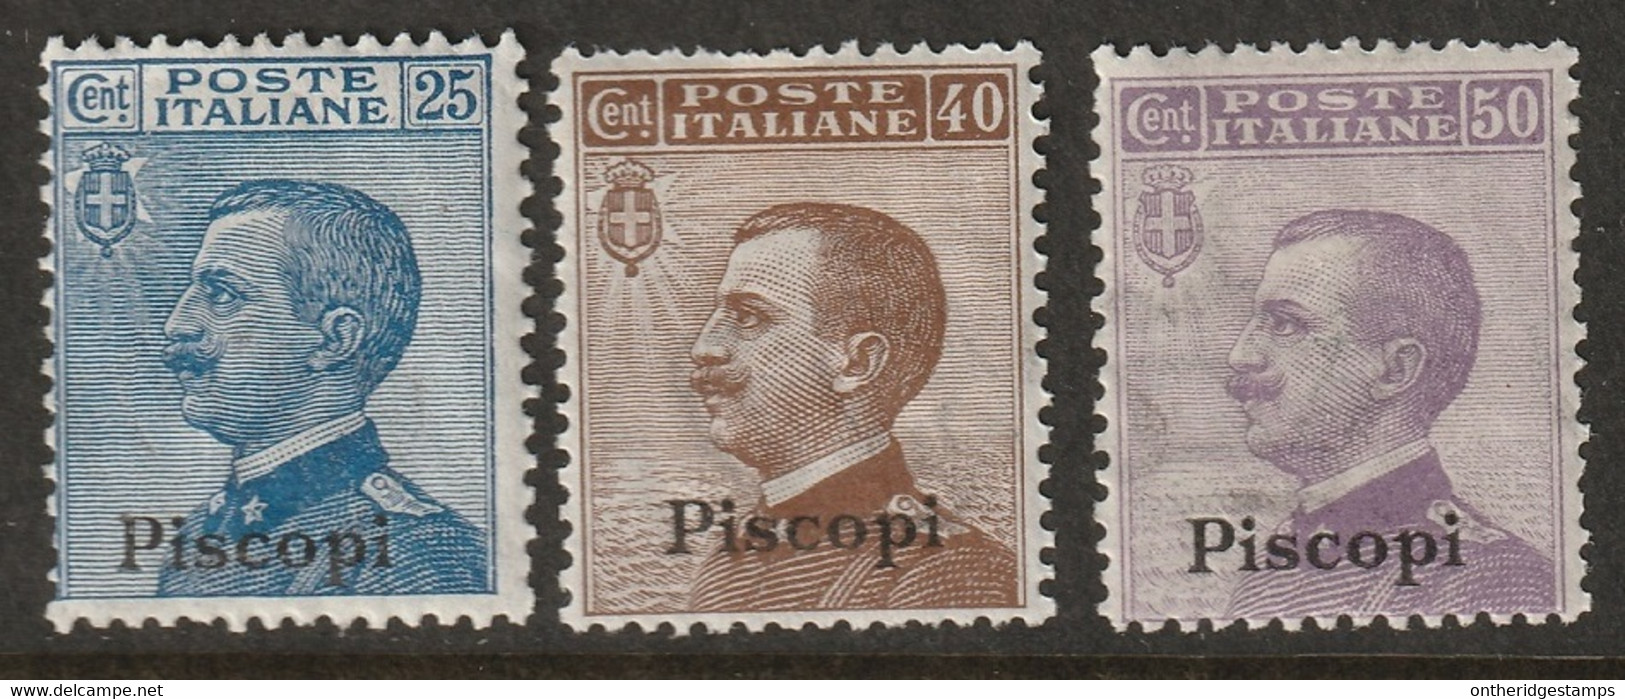 Italy Aegean Piscopi 1912 Sc 6-8 Egeo Piscopi Sa 5-7 MH* Some Crazed Gum - Egeo (Piscopi)